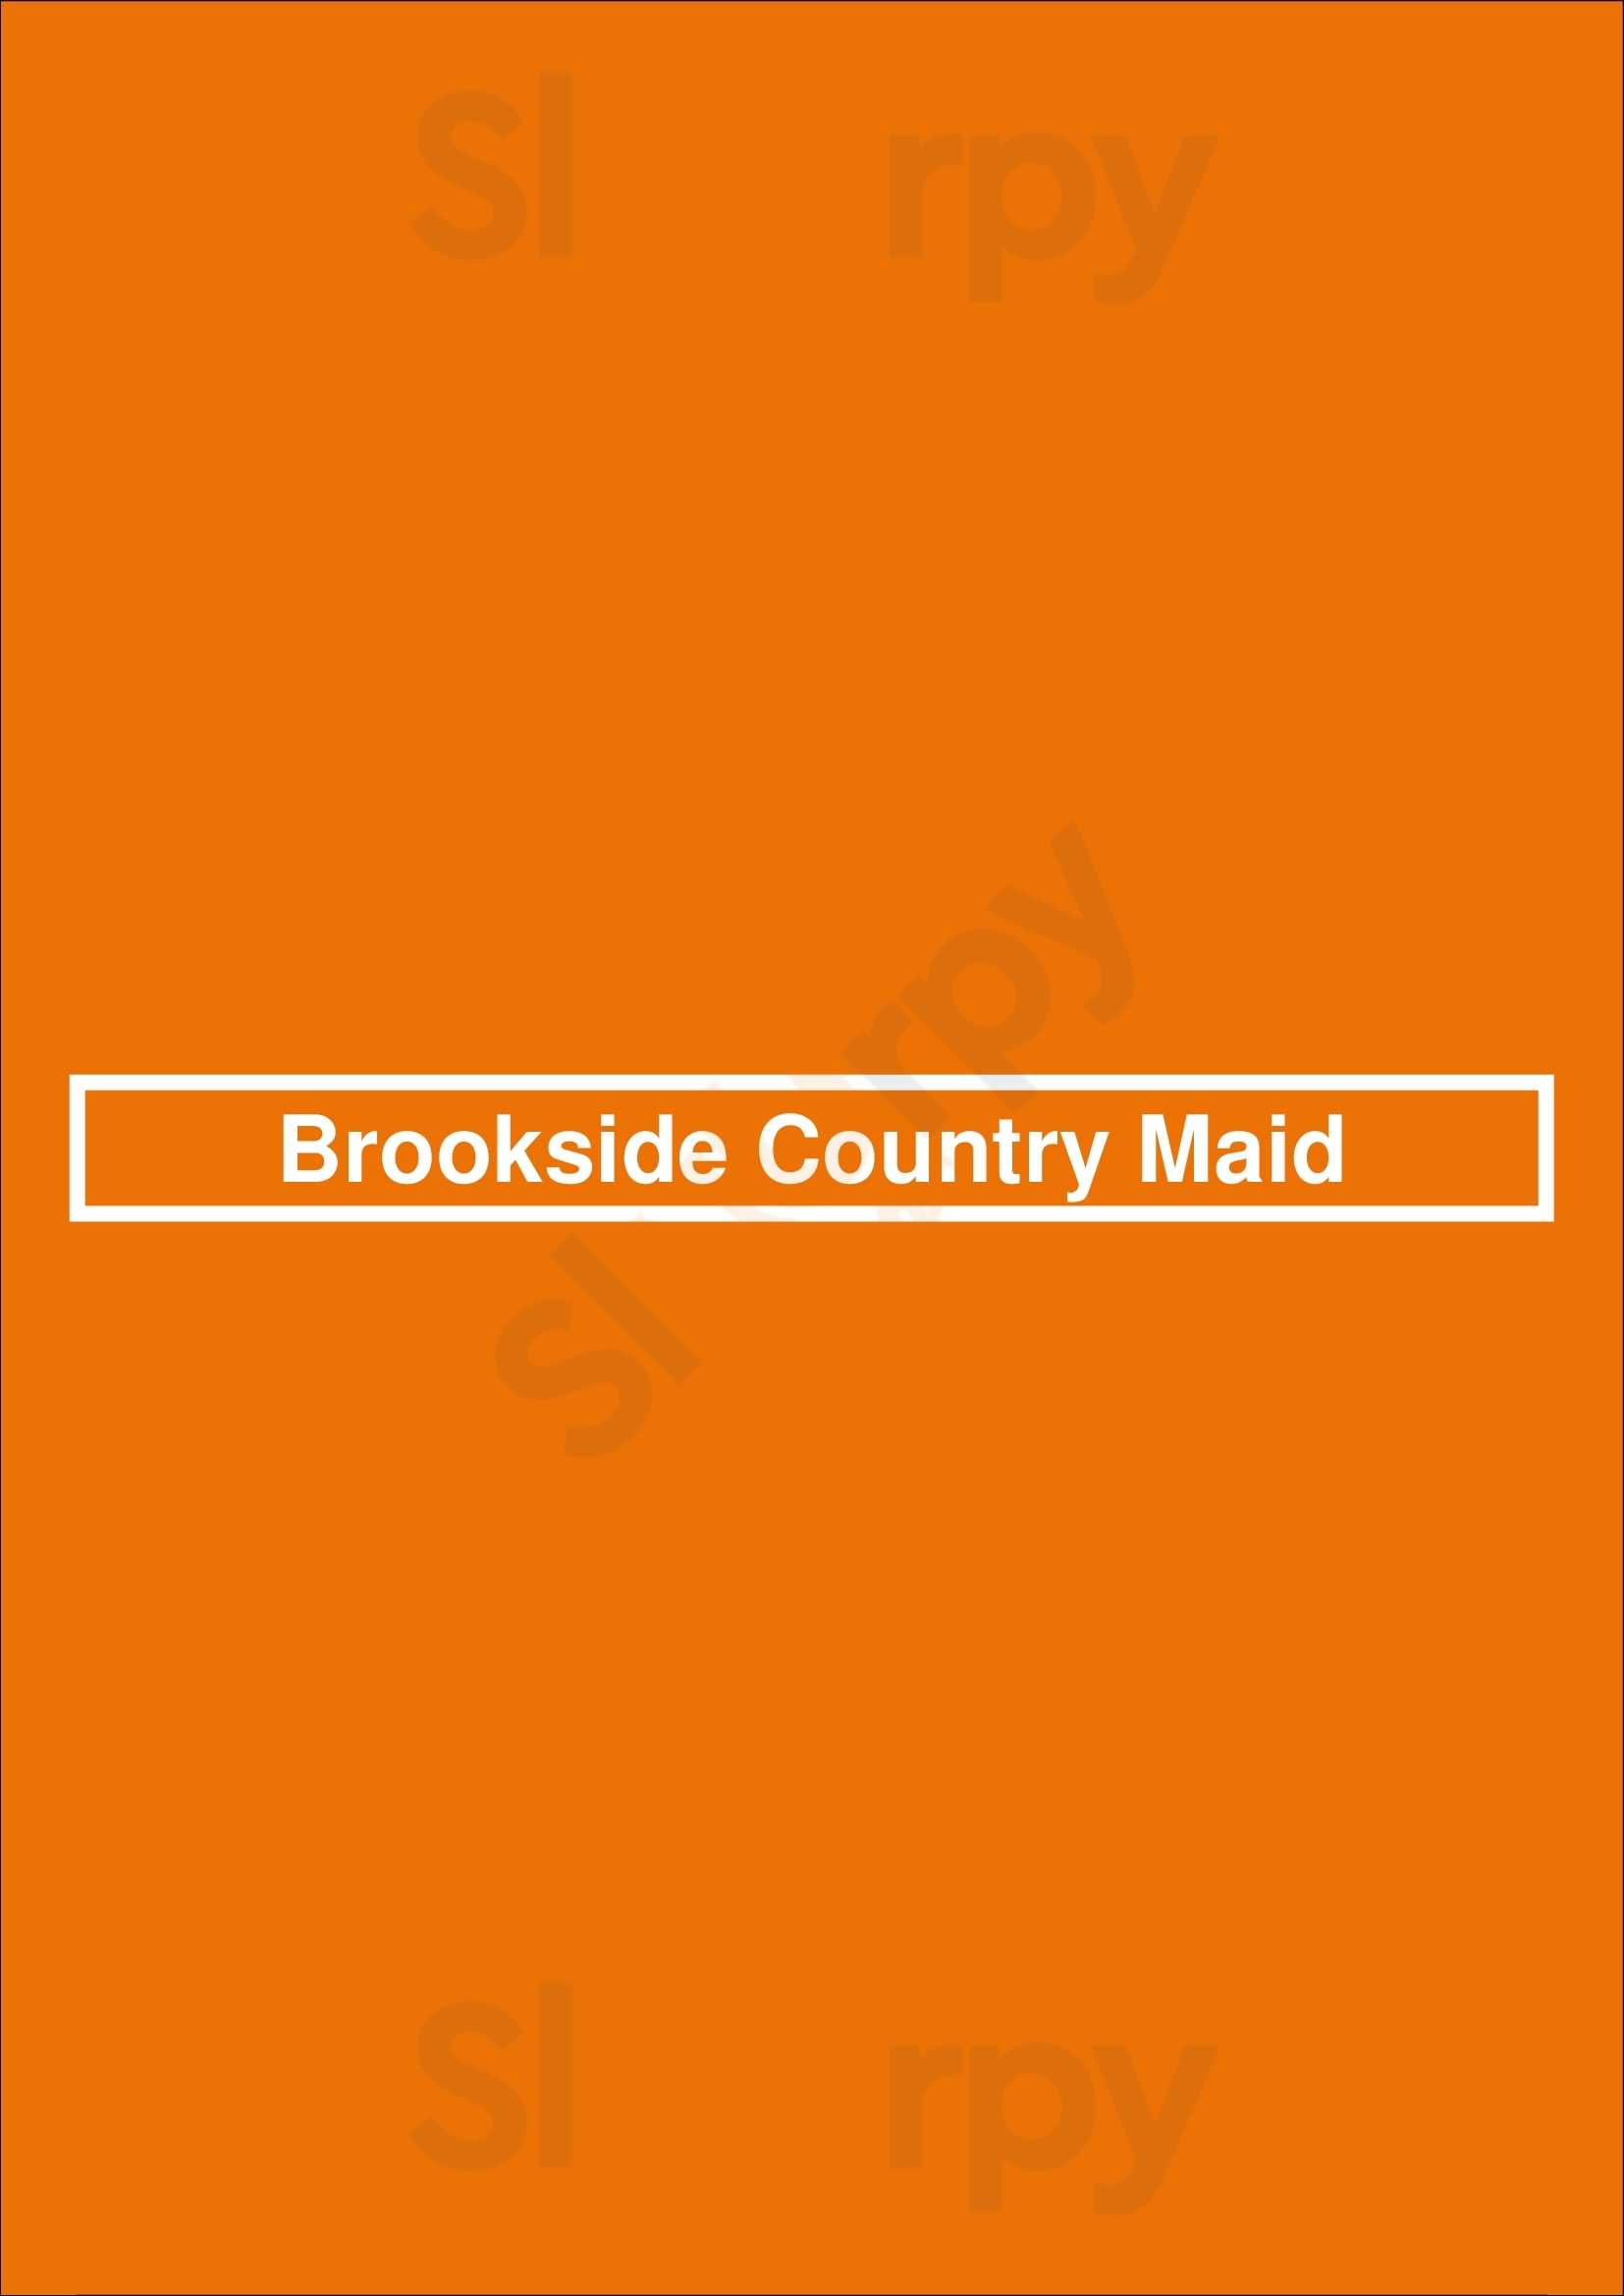 Brookside Country Maid Newark Menu - 1